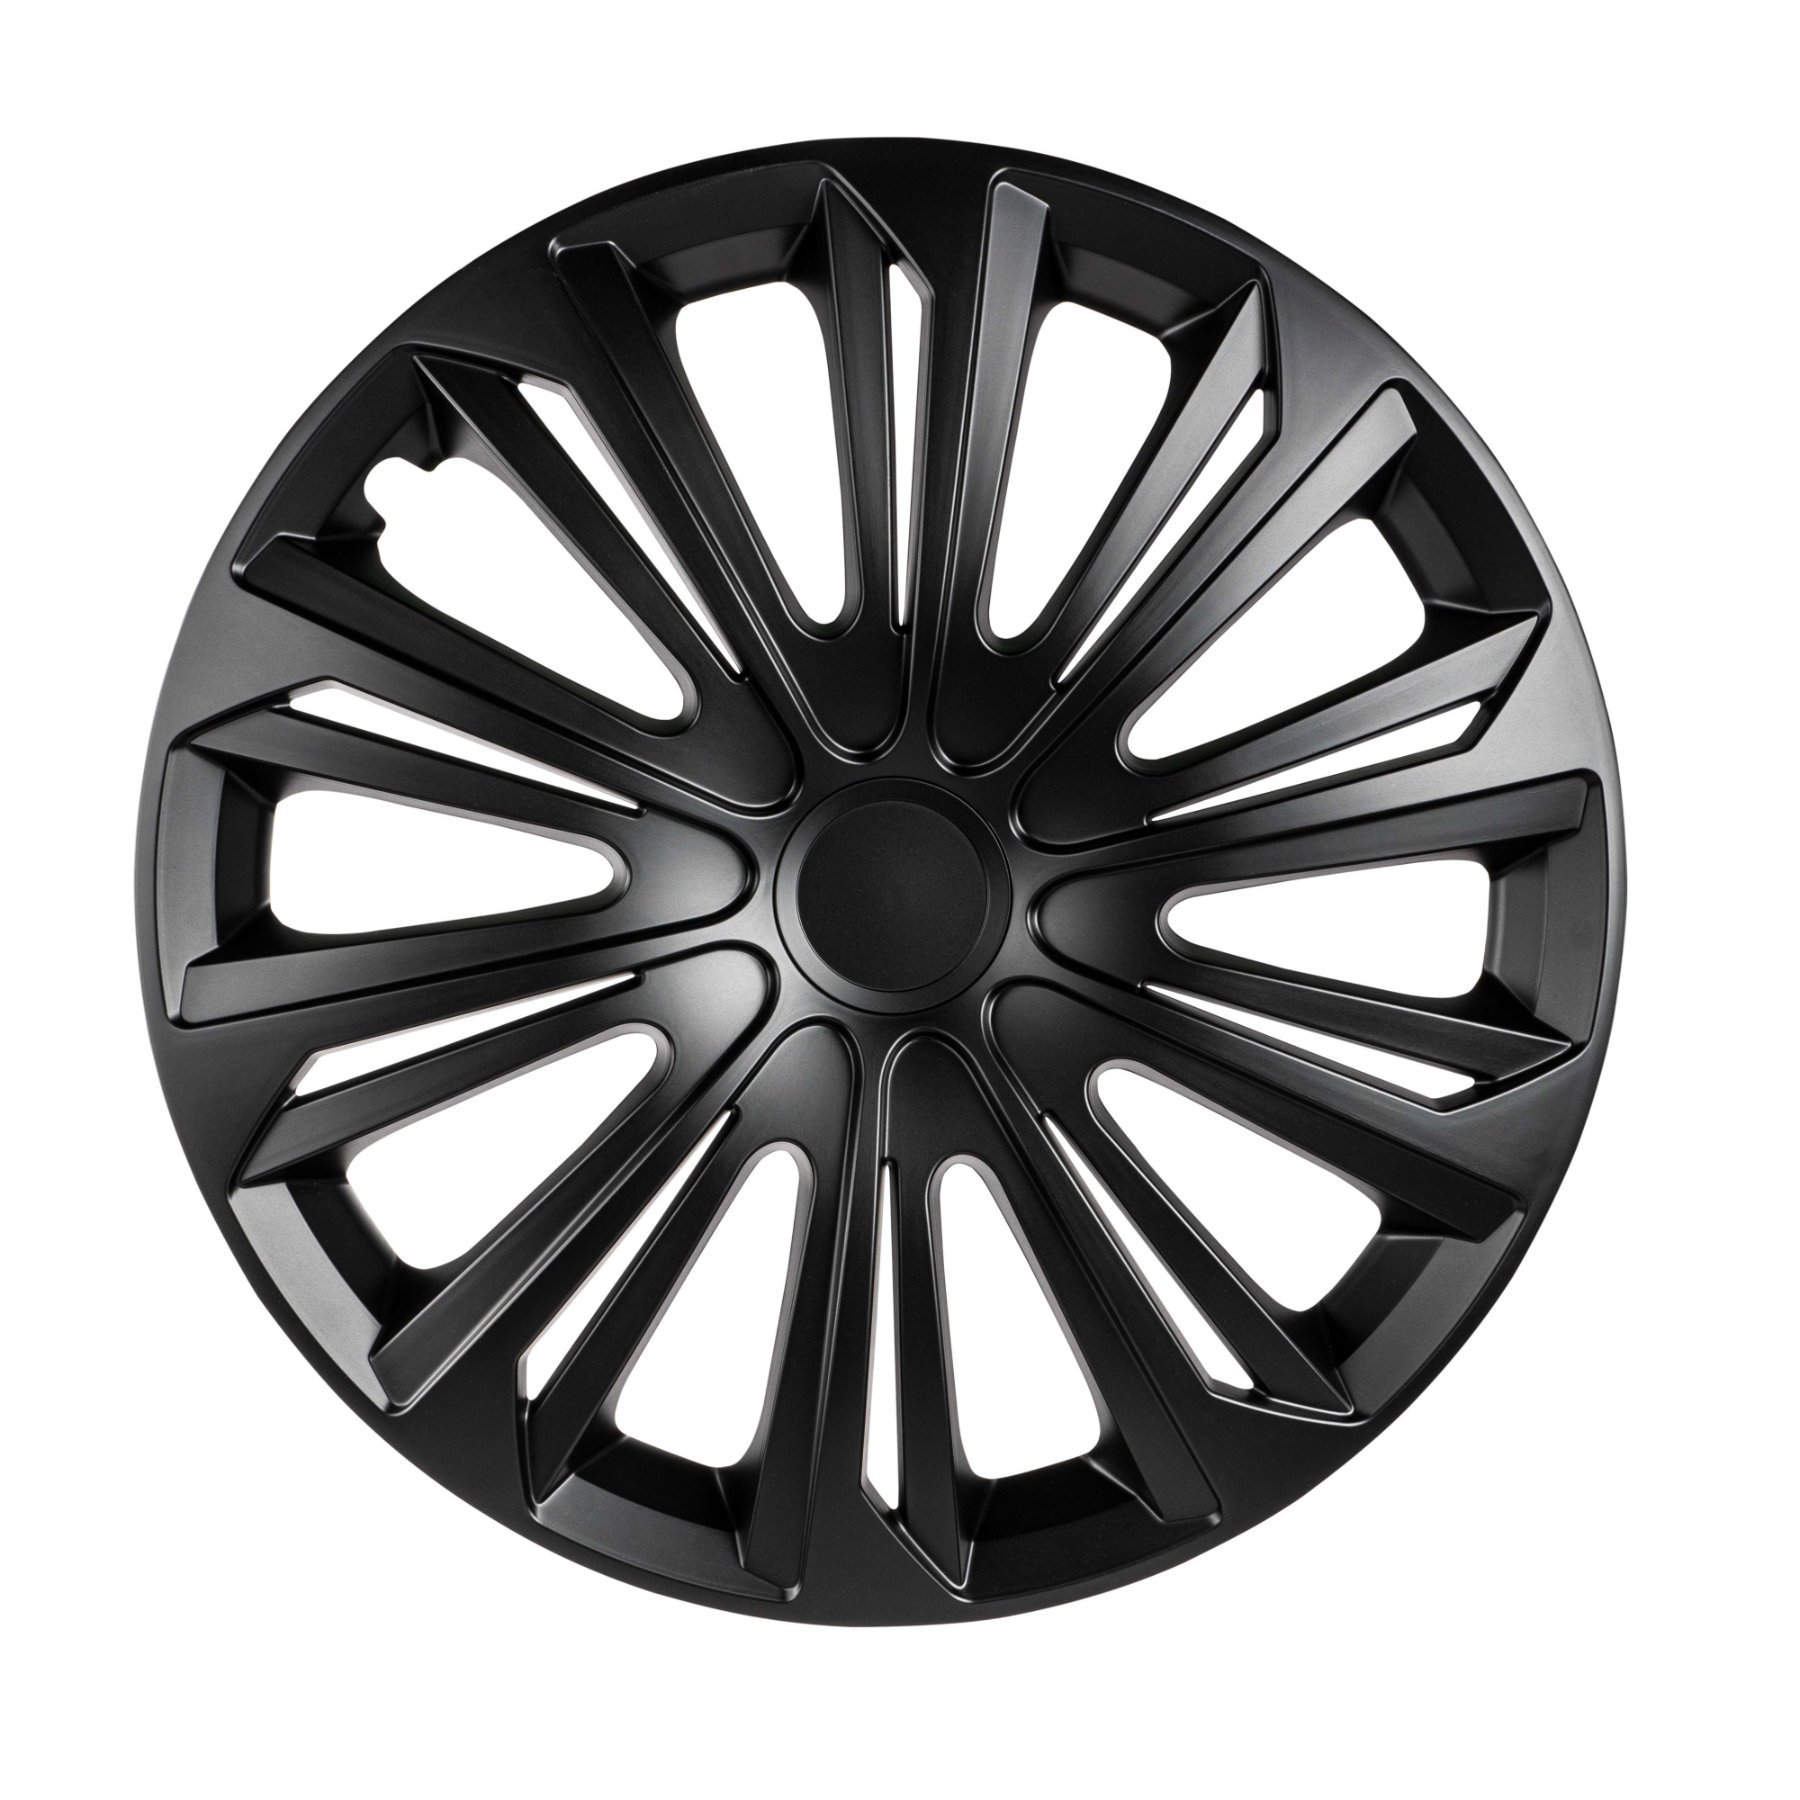 Wheel covers Racer 15", 4 piece black